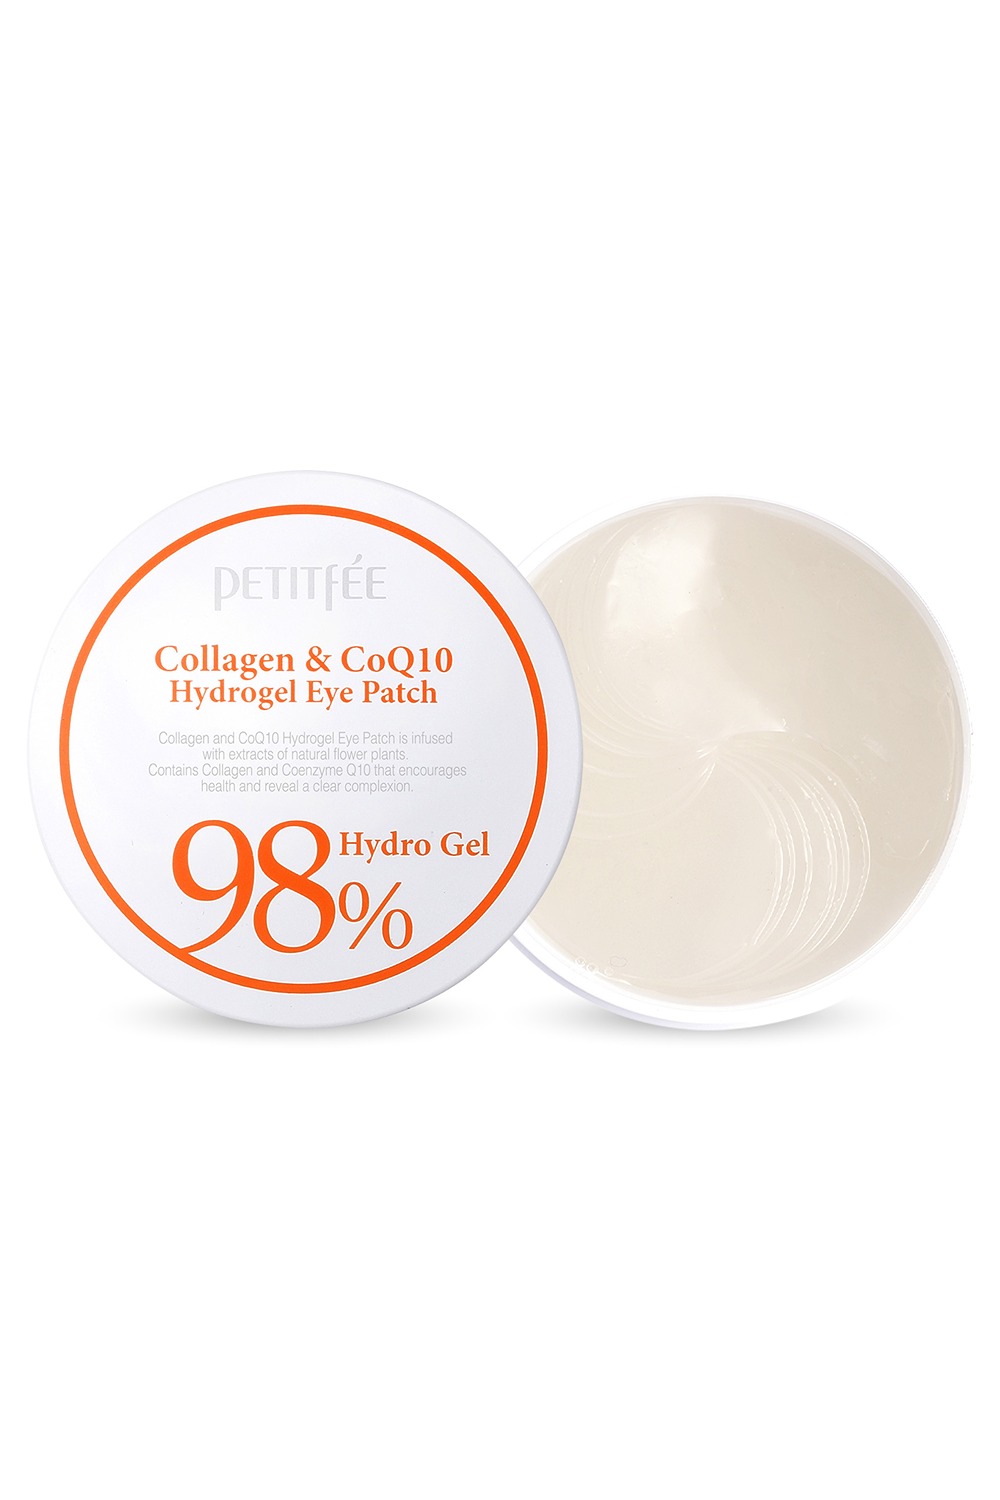 Petitfée Collagen & Coq10 Hydrogel Eye Patch